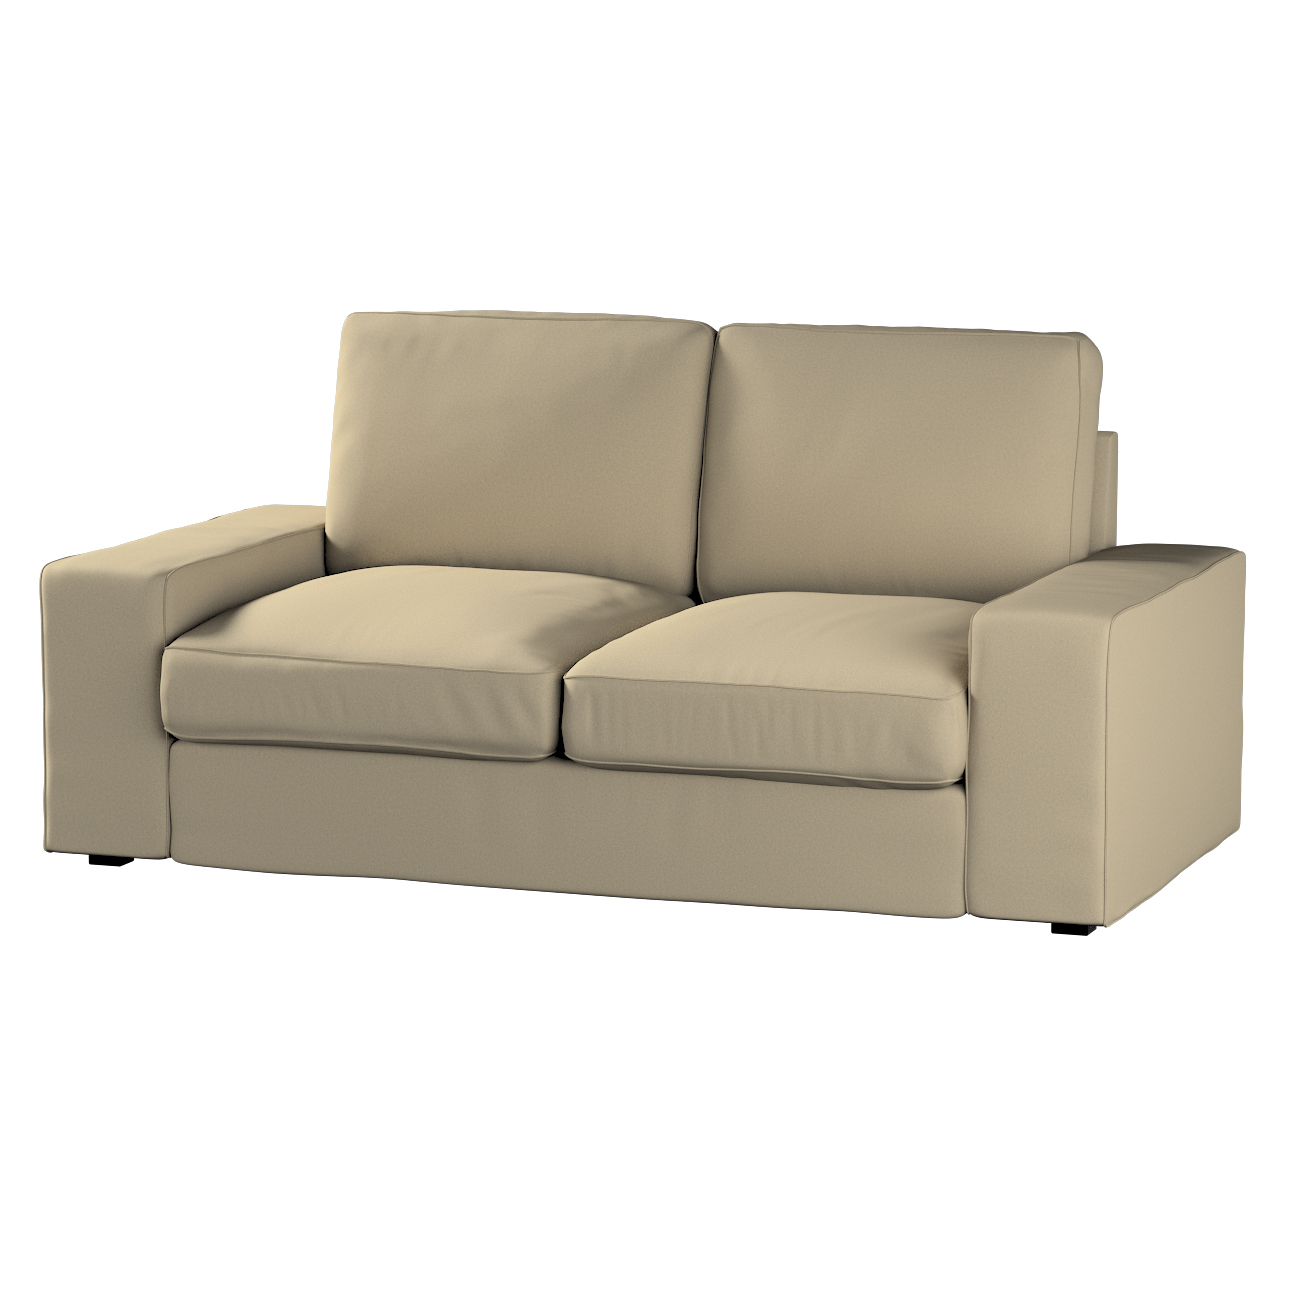 Bezug für Kivik 2-Sitzer Sofa, dunkelbeige, Bezug für Sofa Kivik 2-Sitzer, günstig online kaufen